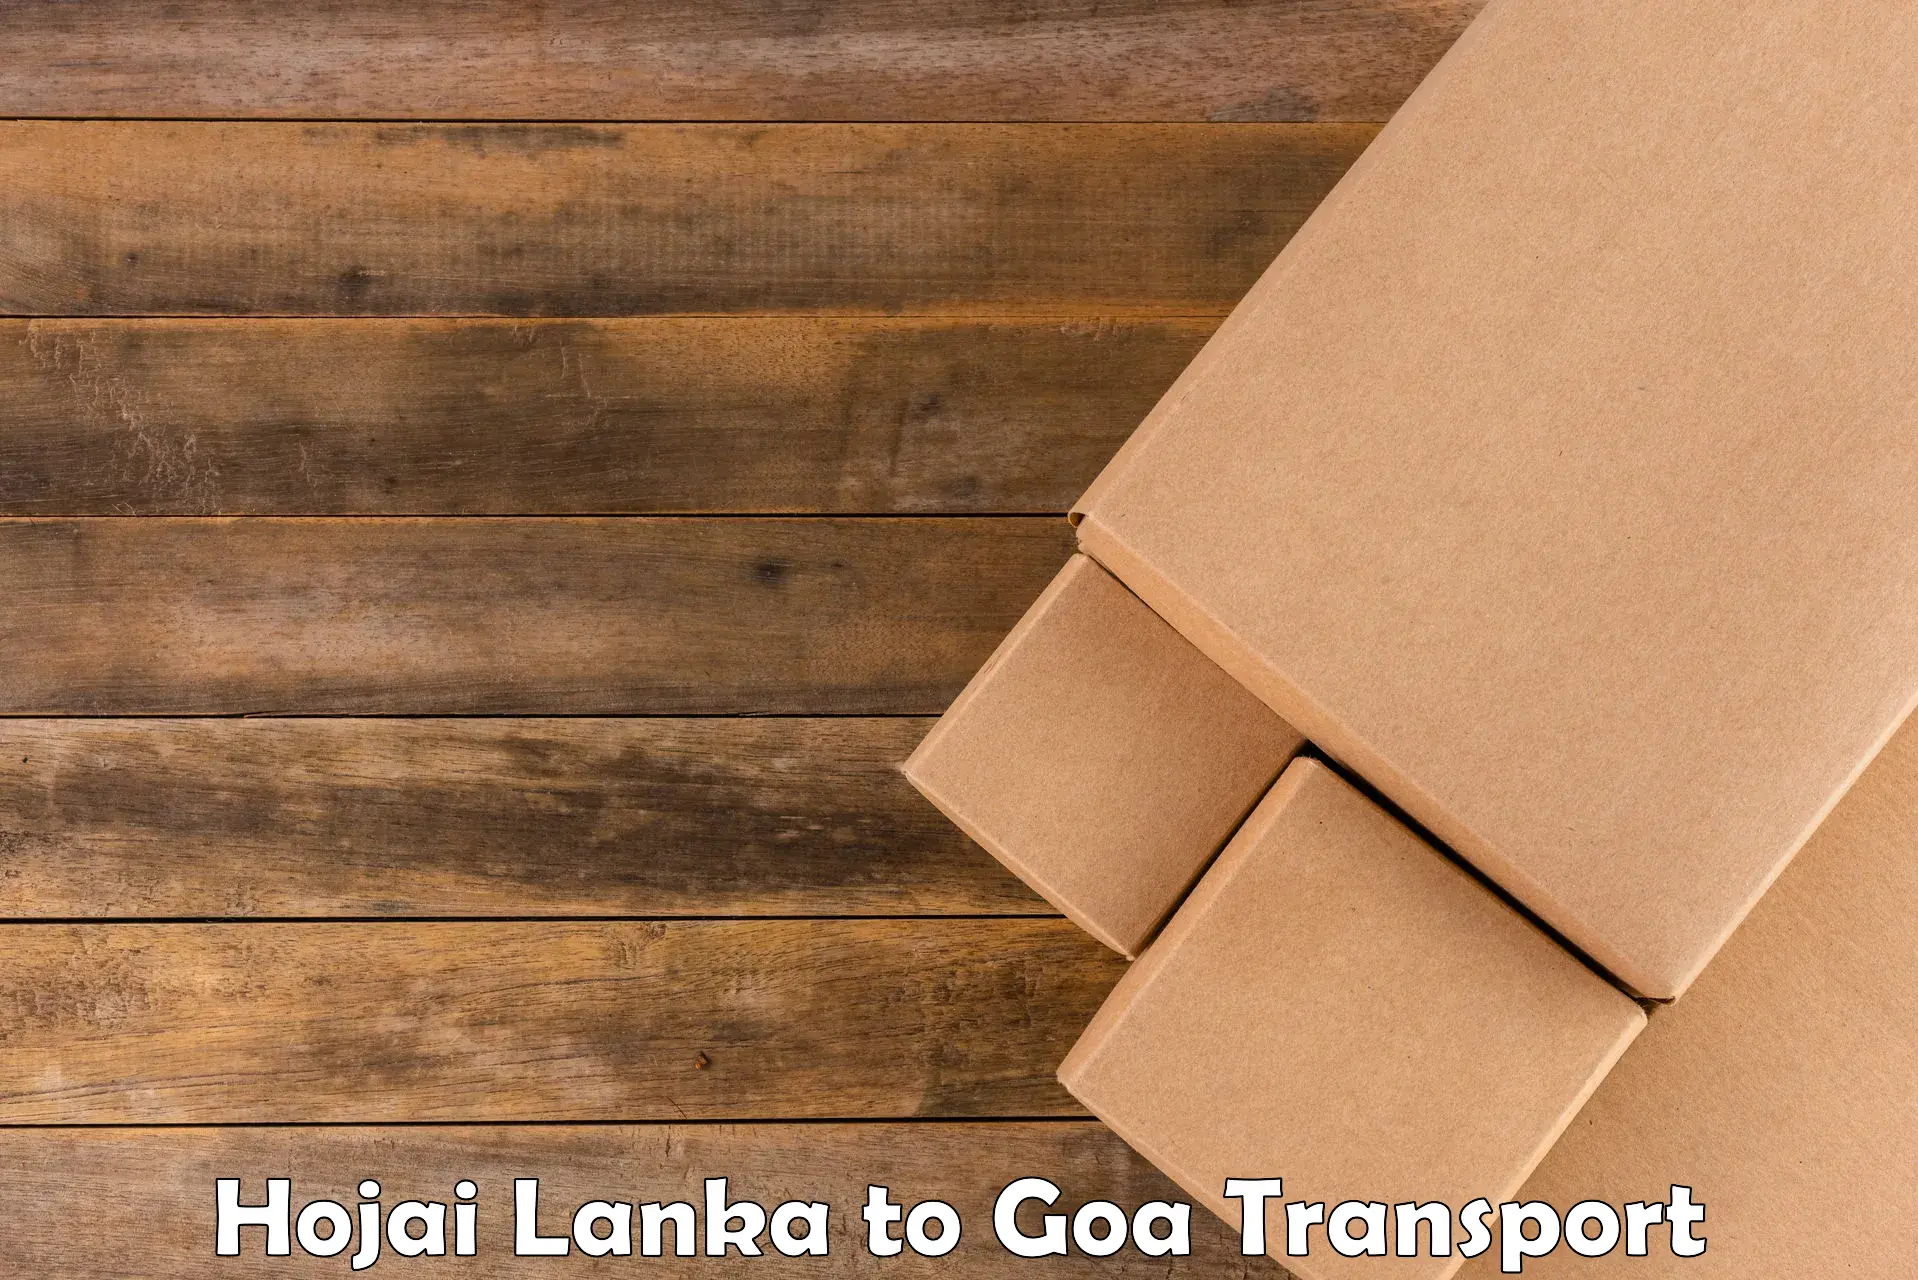 Express transport services Hojai Lanka to Goa University